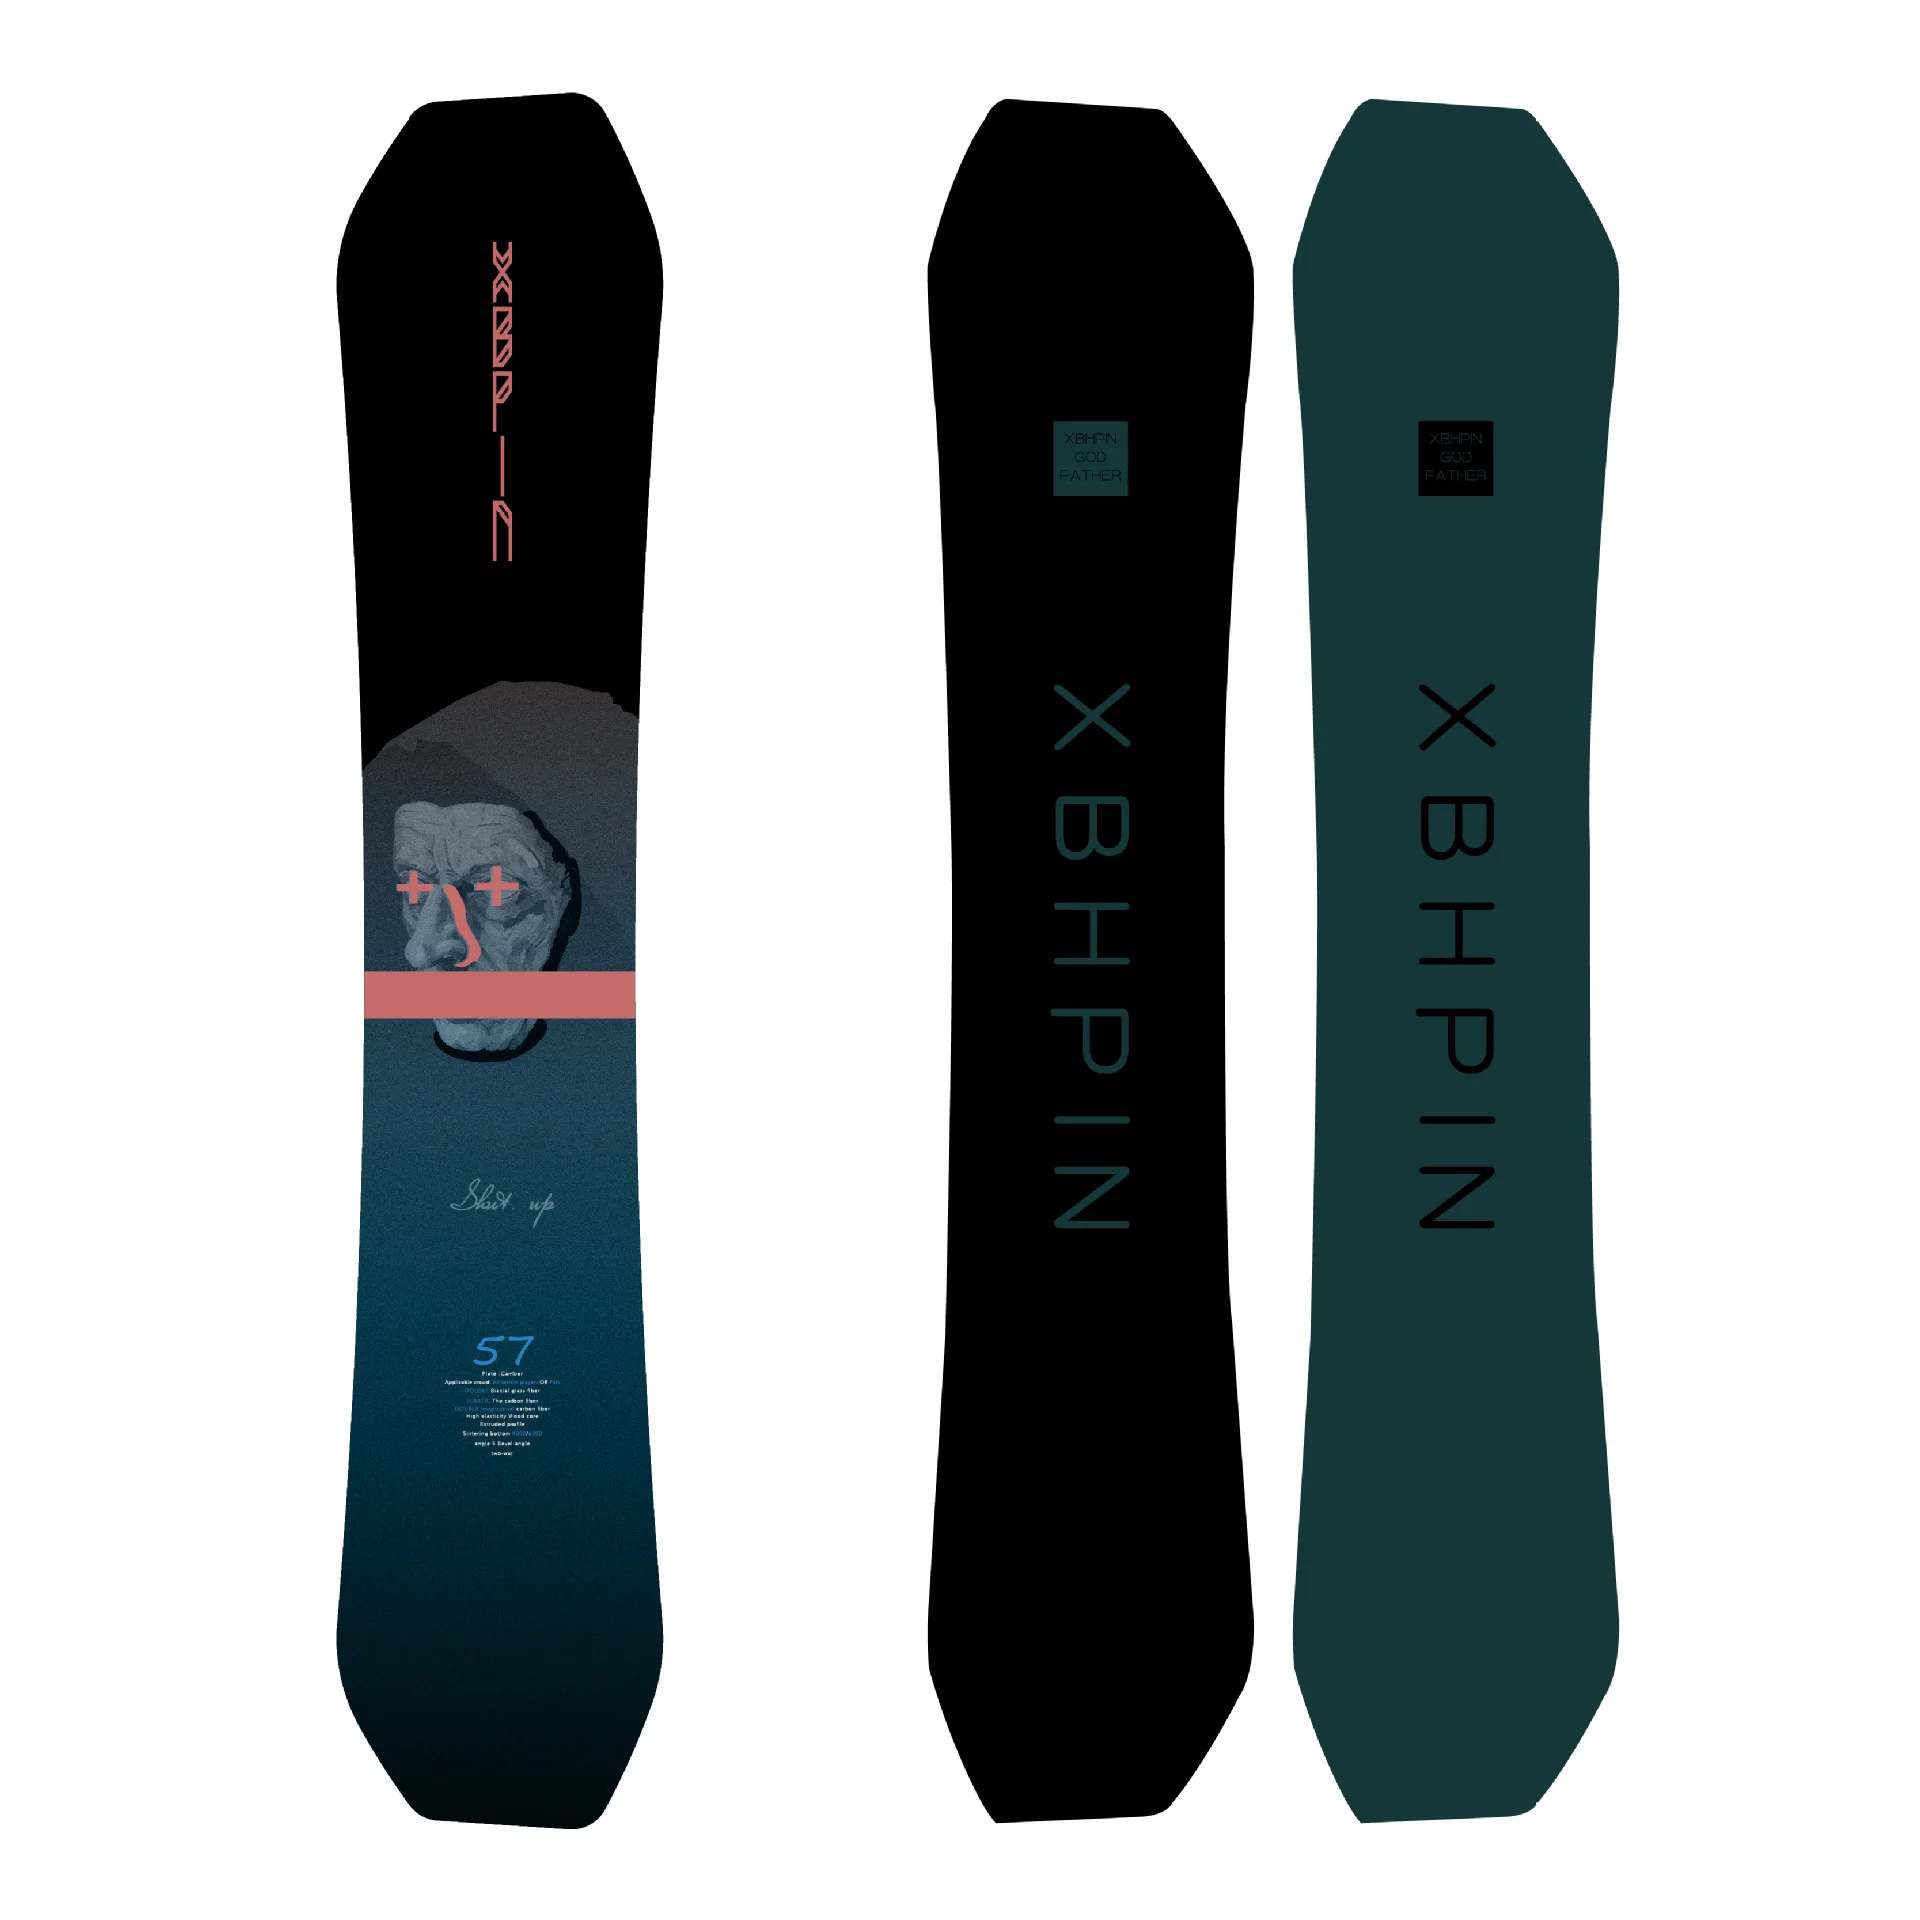 Style Lightweight Skiing Custom Snowboard - Buy Style Custom Snowboard,Lightweight Skiing 160cm Adult Snowboard Product on Alibaba.com